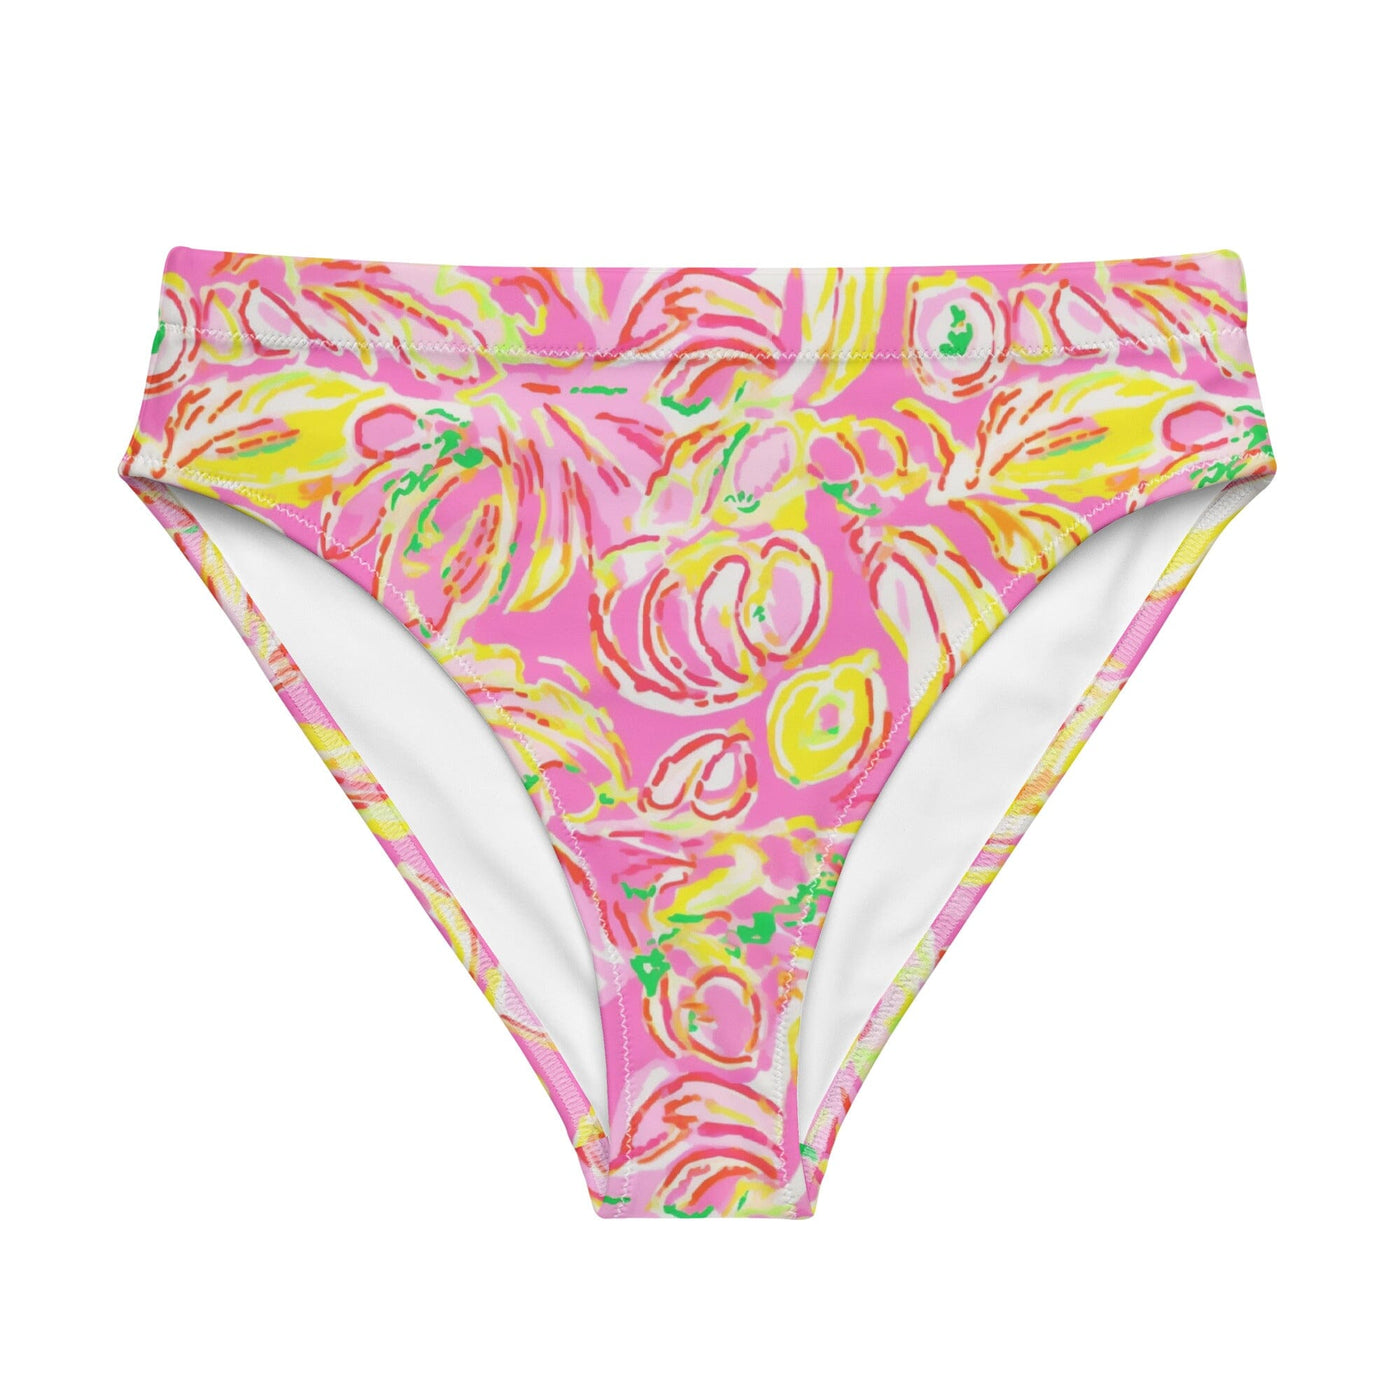 Siesta Key Bikini Bottom - Coastal Cool - Swimwear and Beachwear - Recycled fabrics